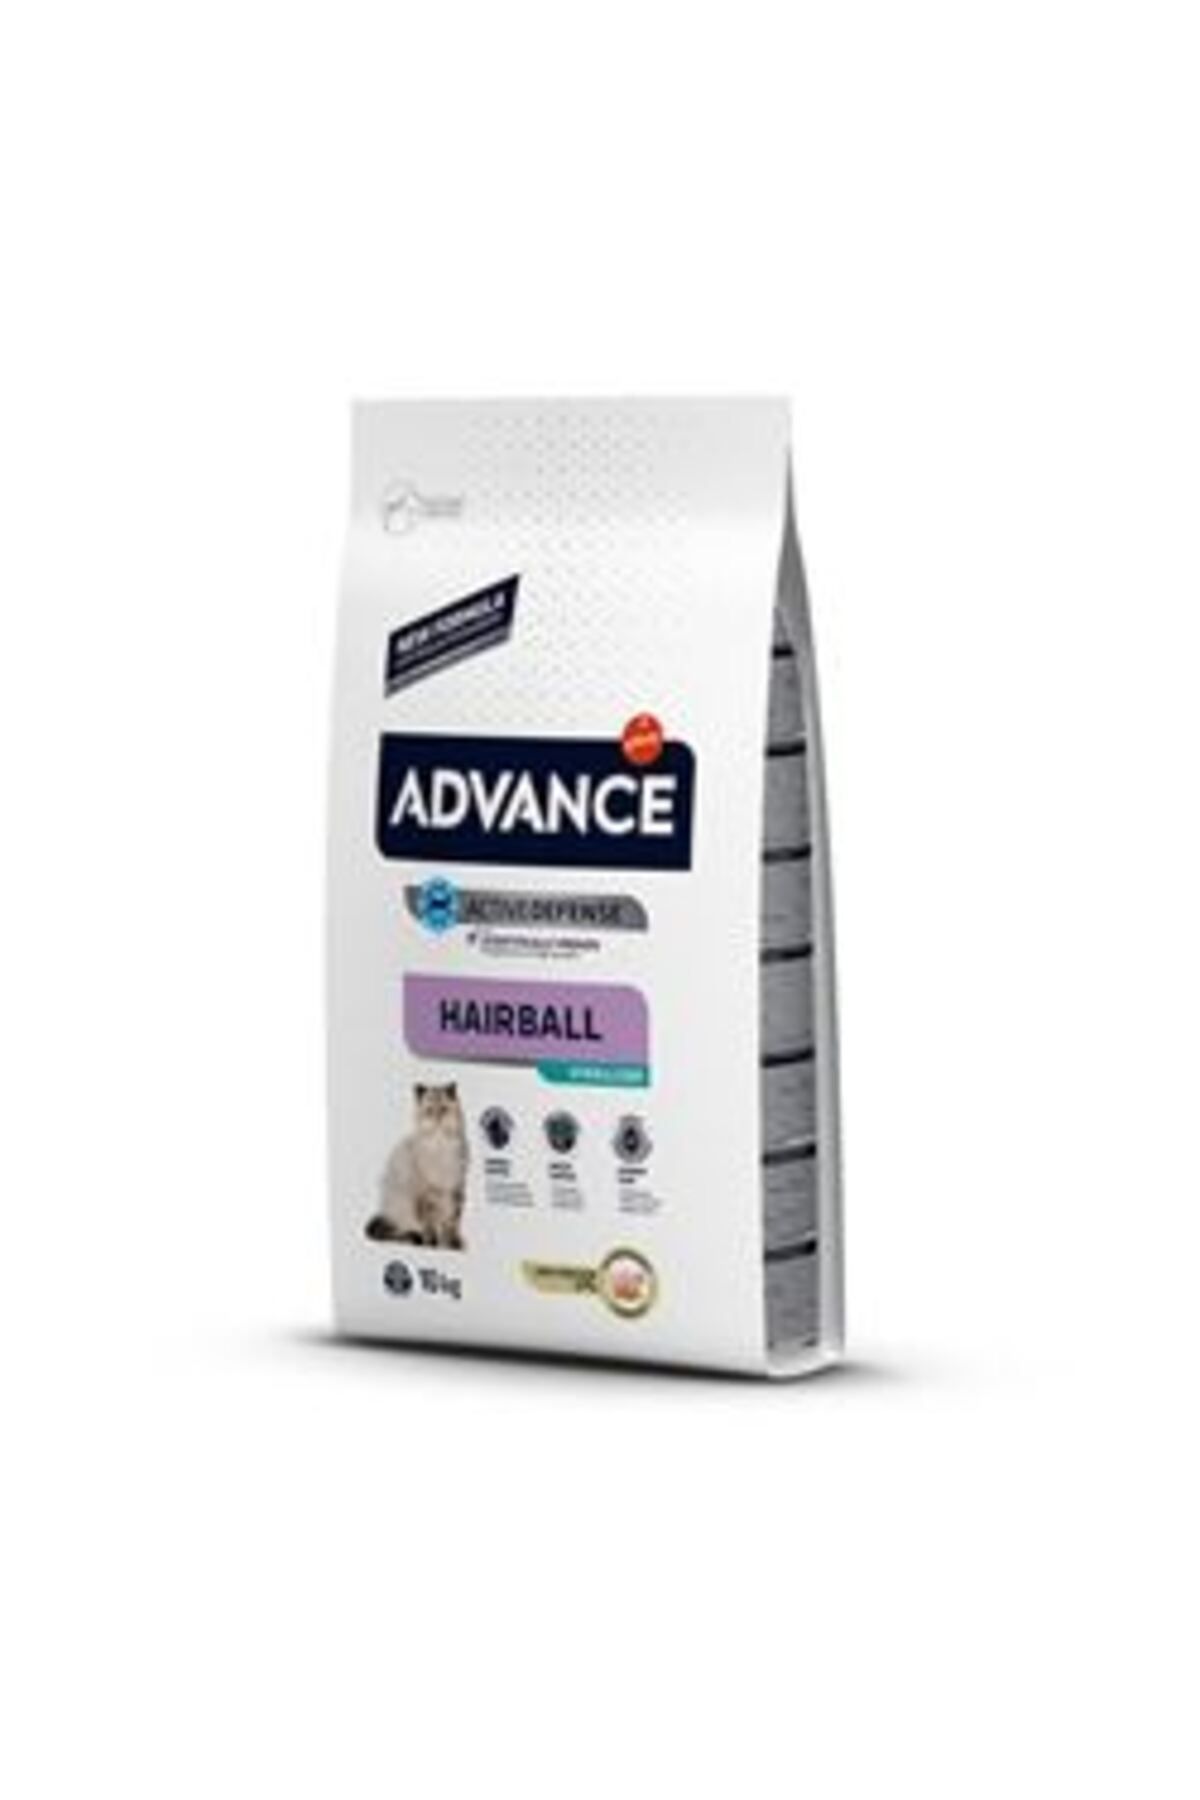 Advance Hairball Hindili Kısırlaştırılmış Kedi Maması 10kg ( 1 ADET )